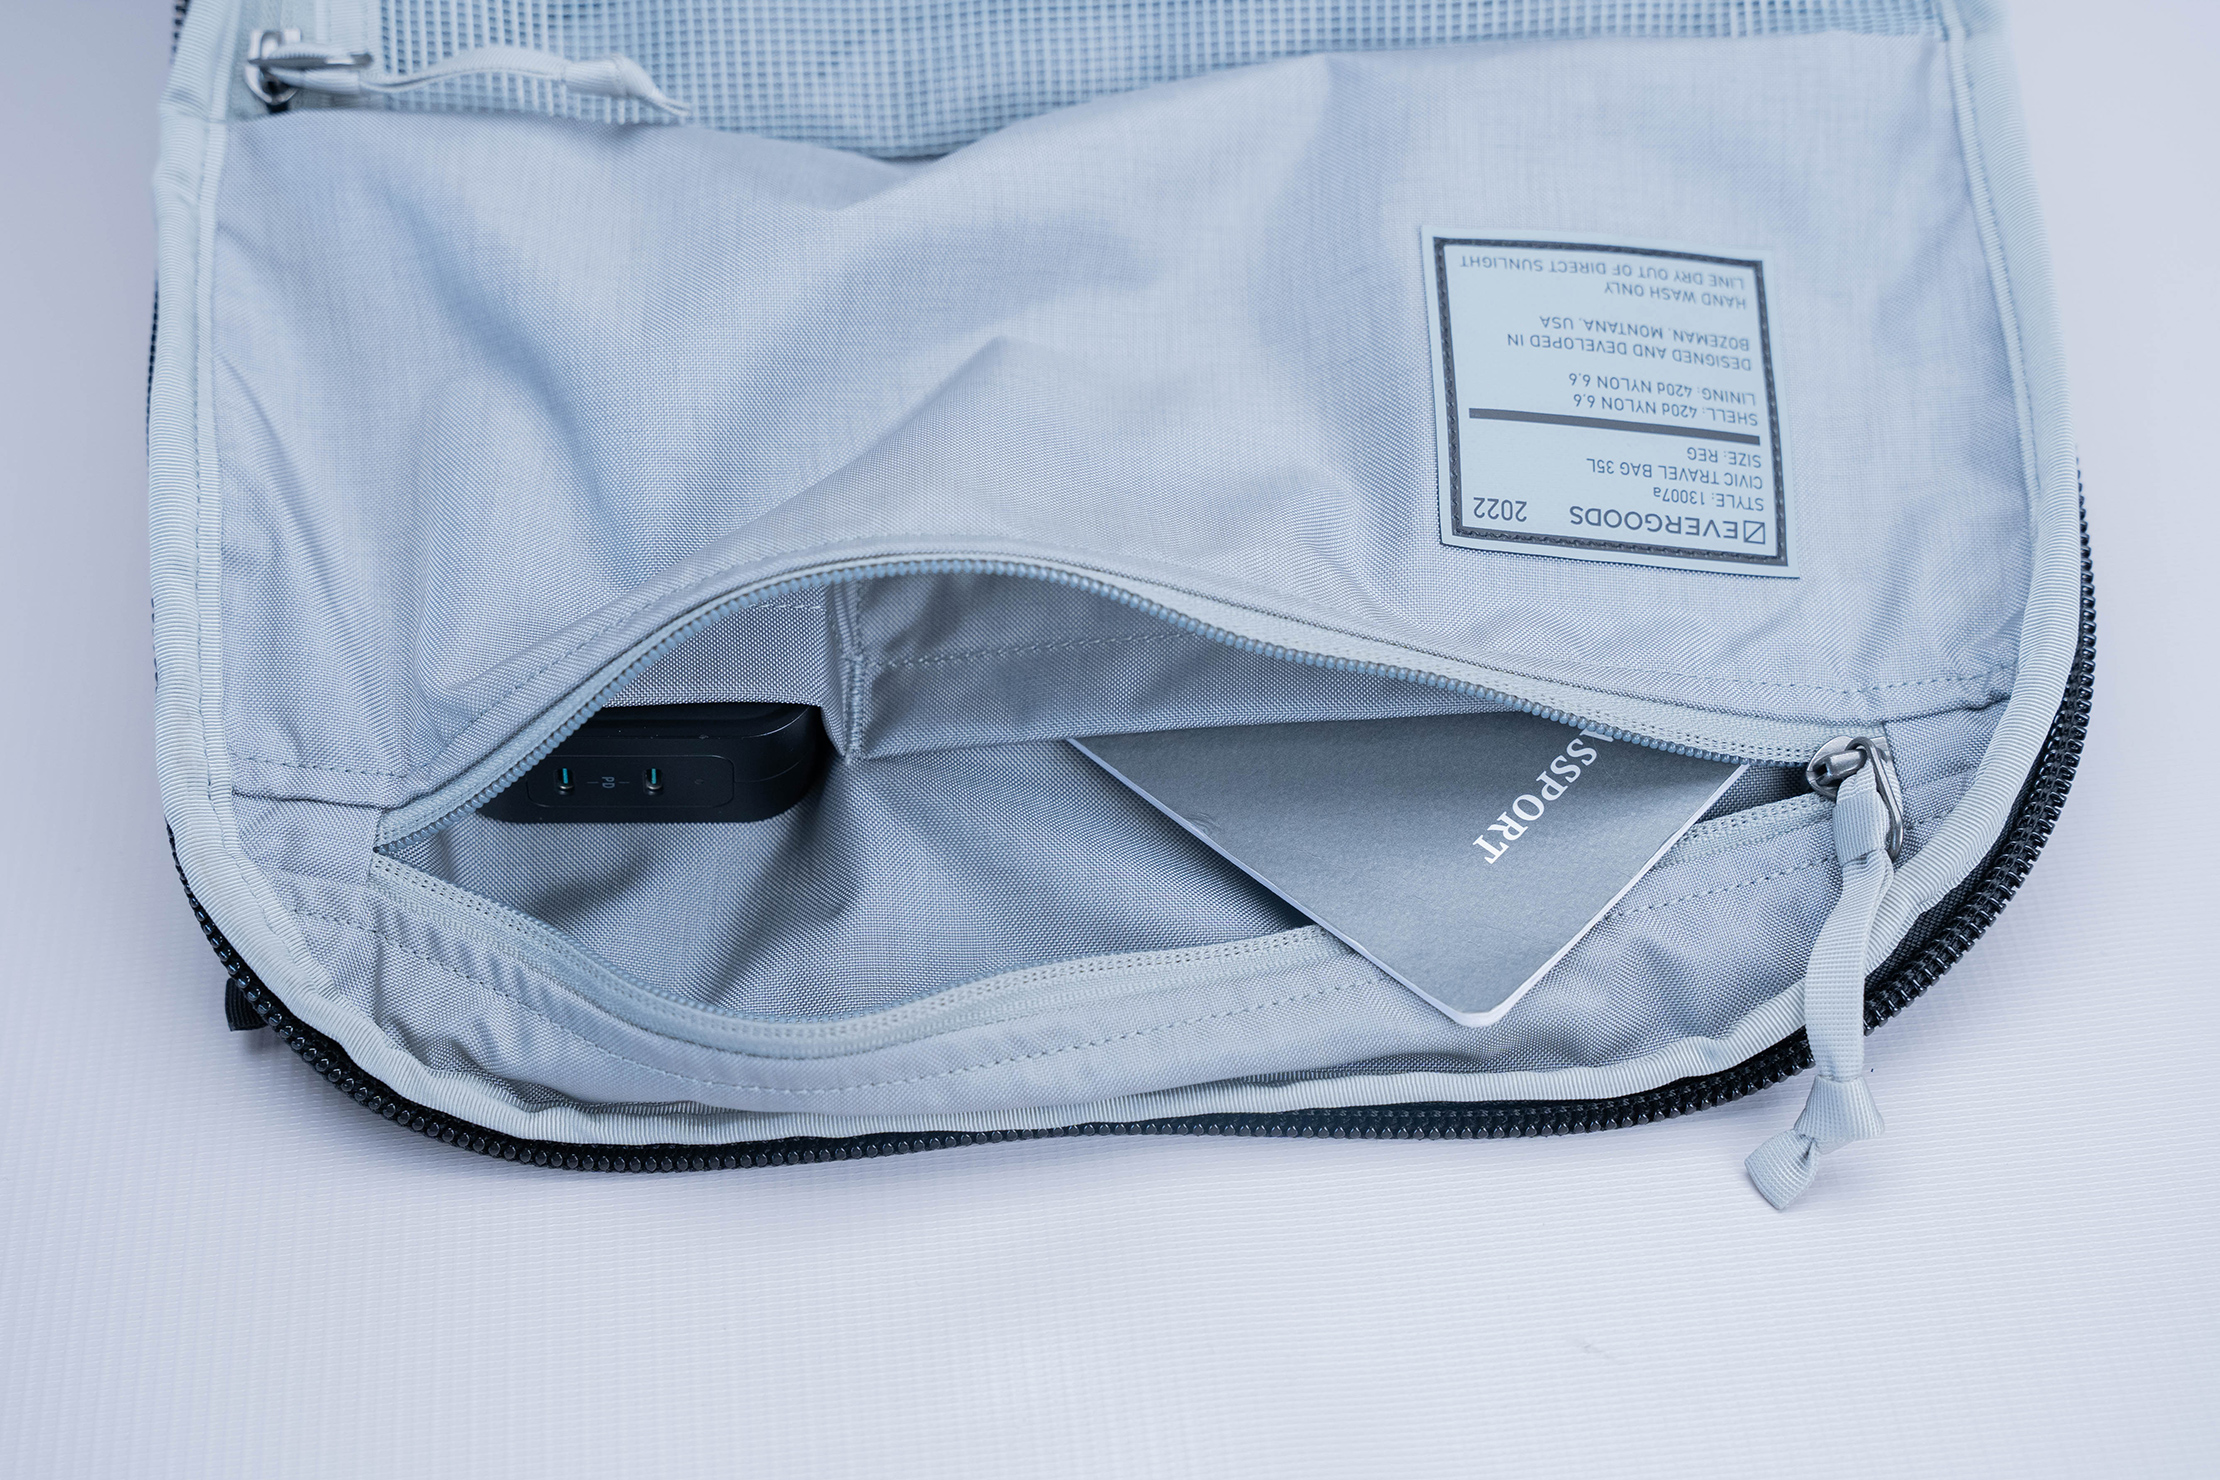 EVERGOODS Civic Travel Bag 35L (CTB35) Interior Pocket 2